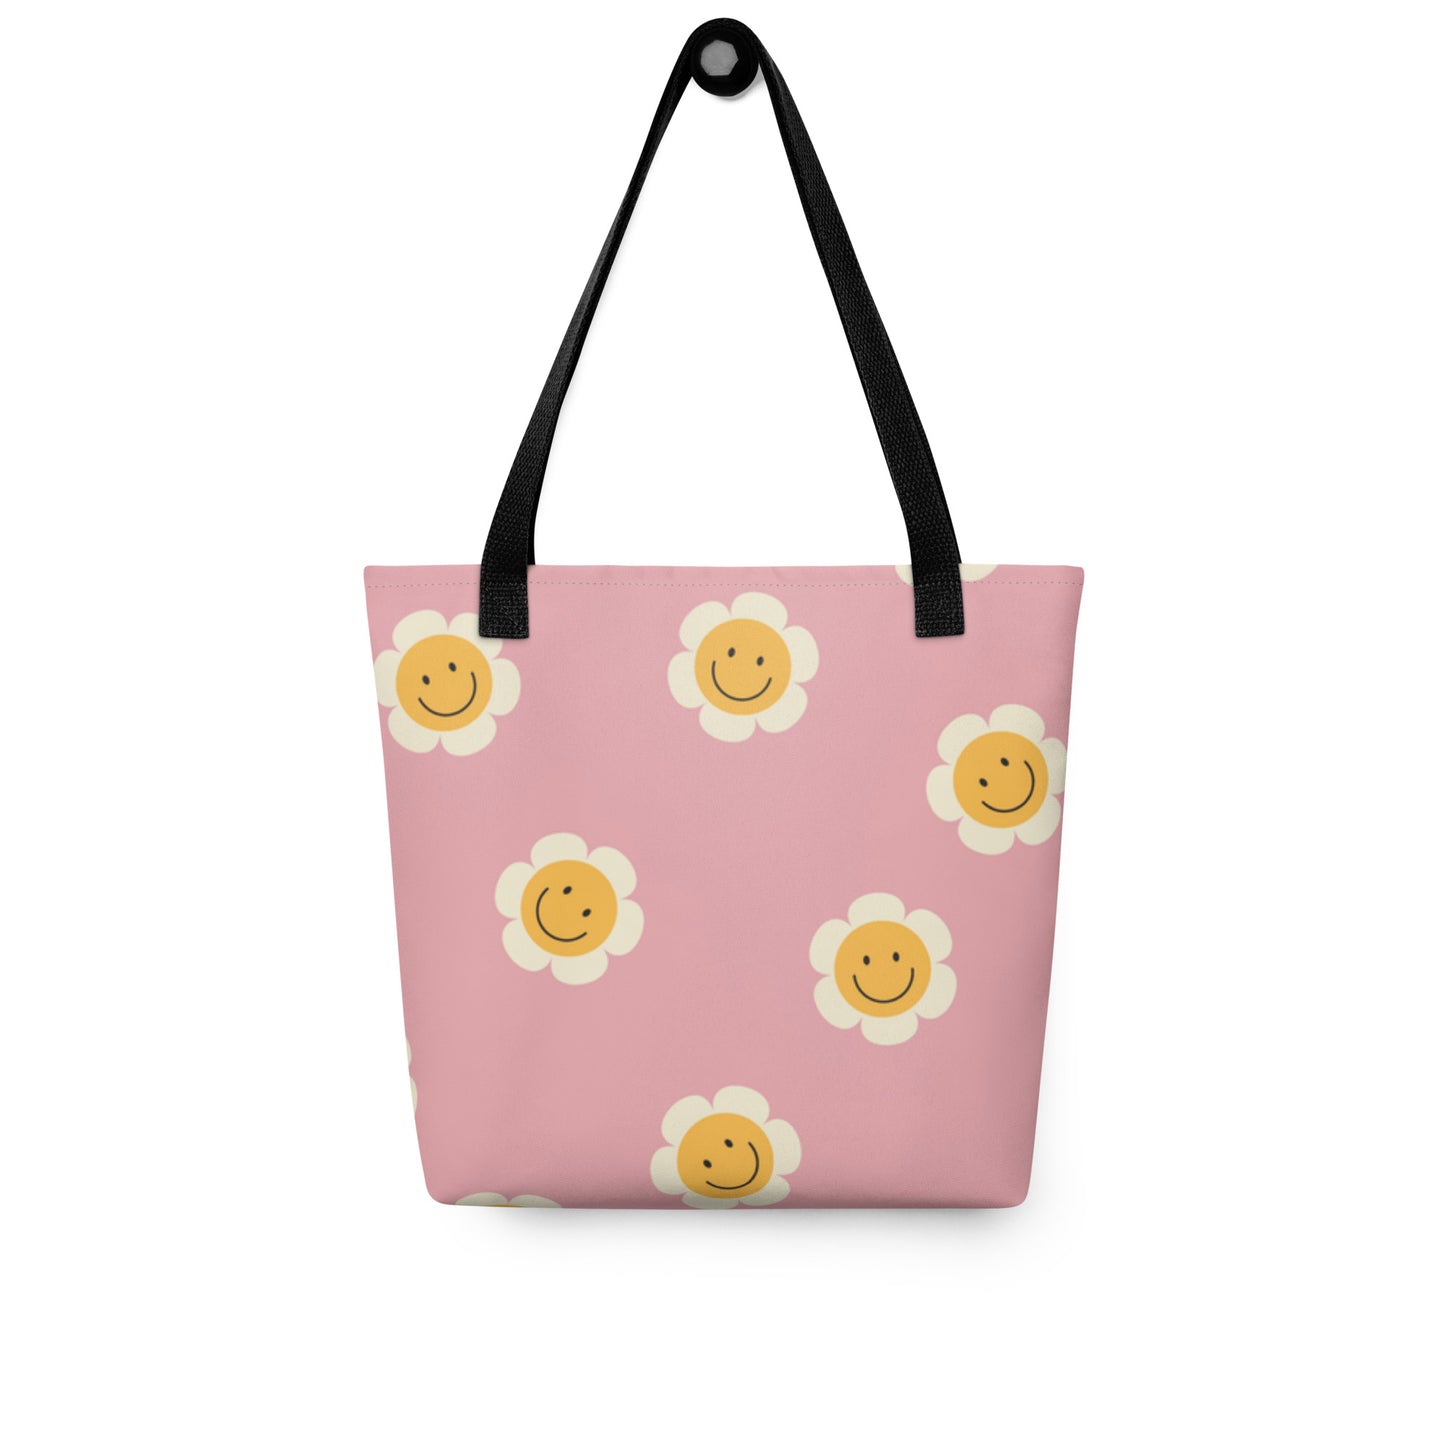 Tote smiley face flower bag